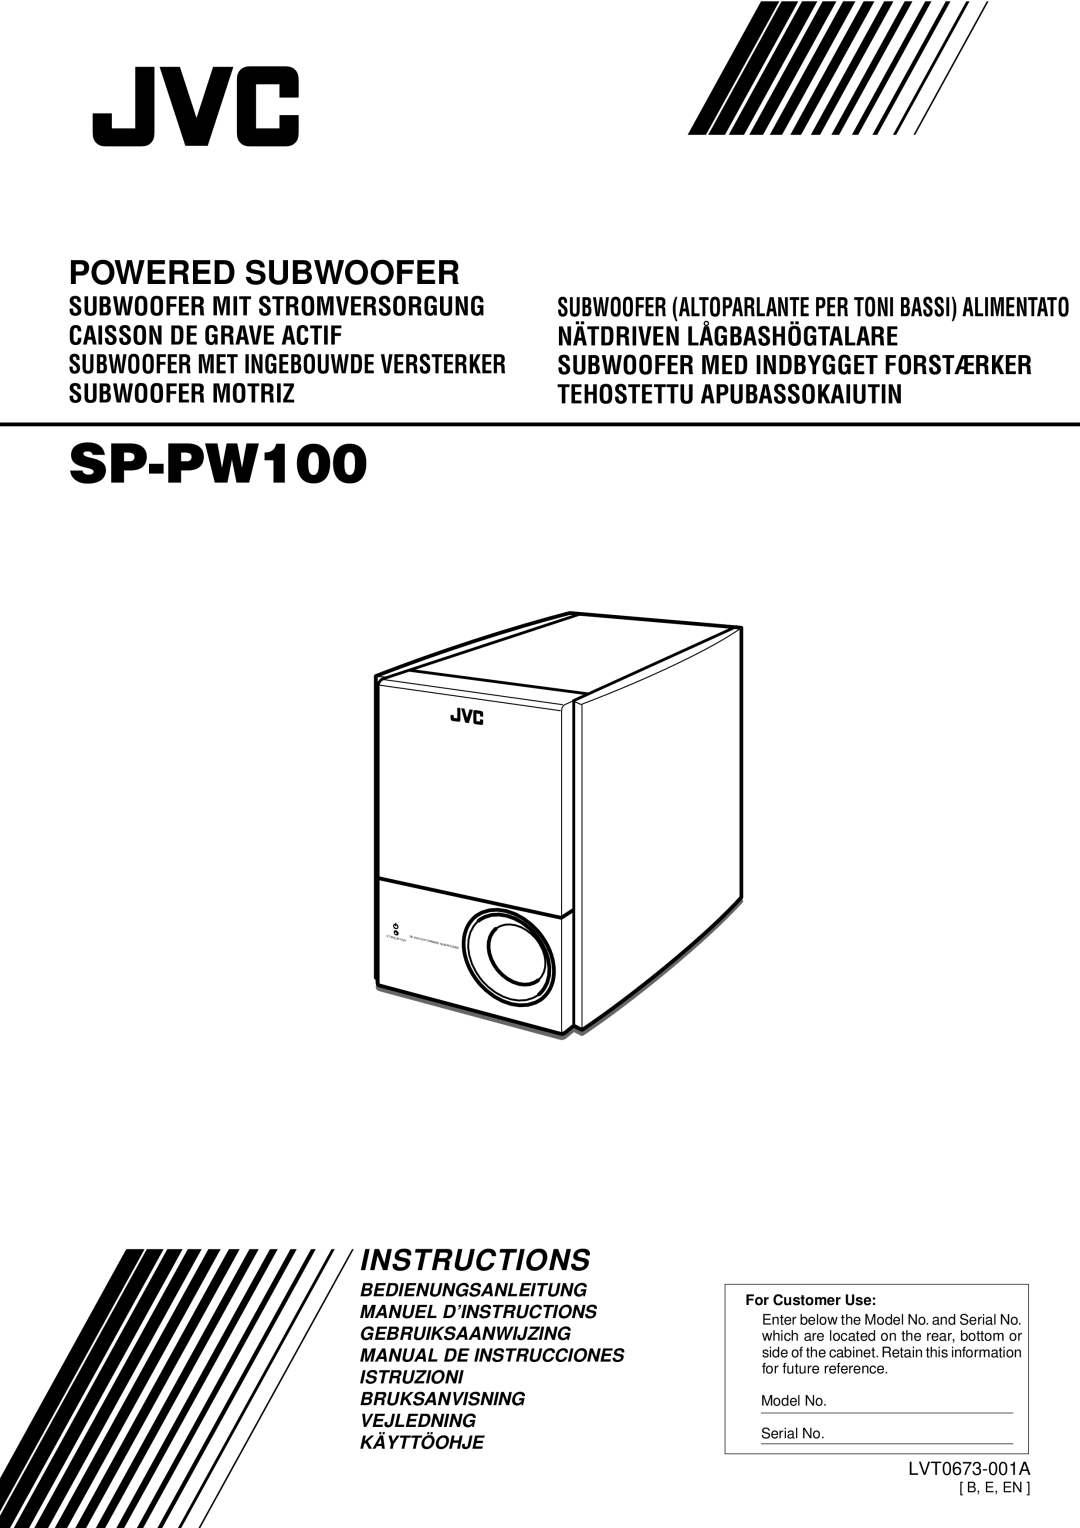 JVC SP-PW100 manual LVT0673-001A, Model No Serial No, B, E, En, Instructions, Powered Subwoofer Compact Component System 